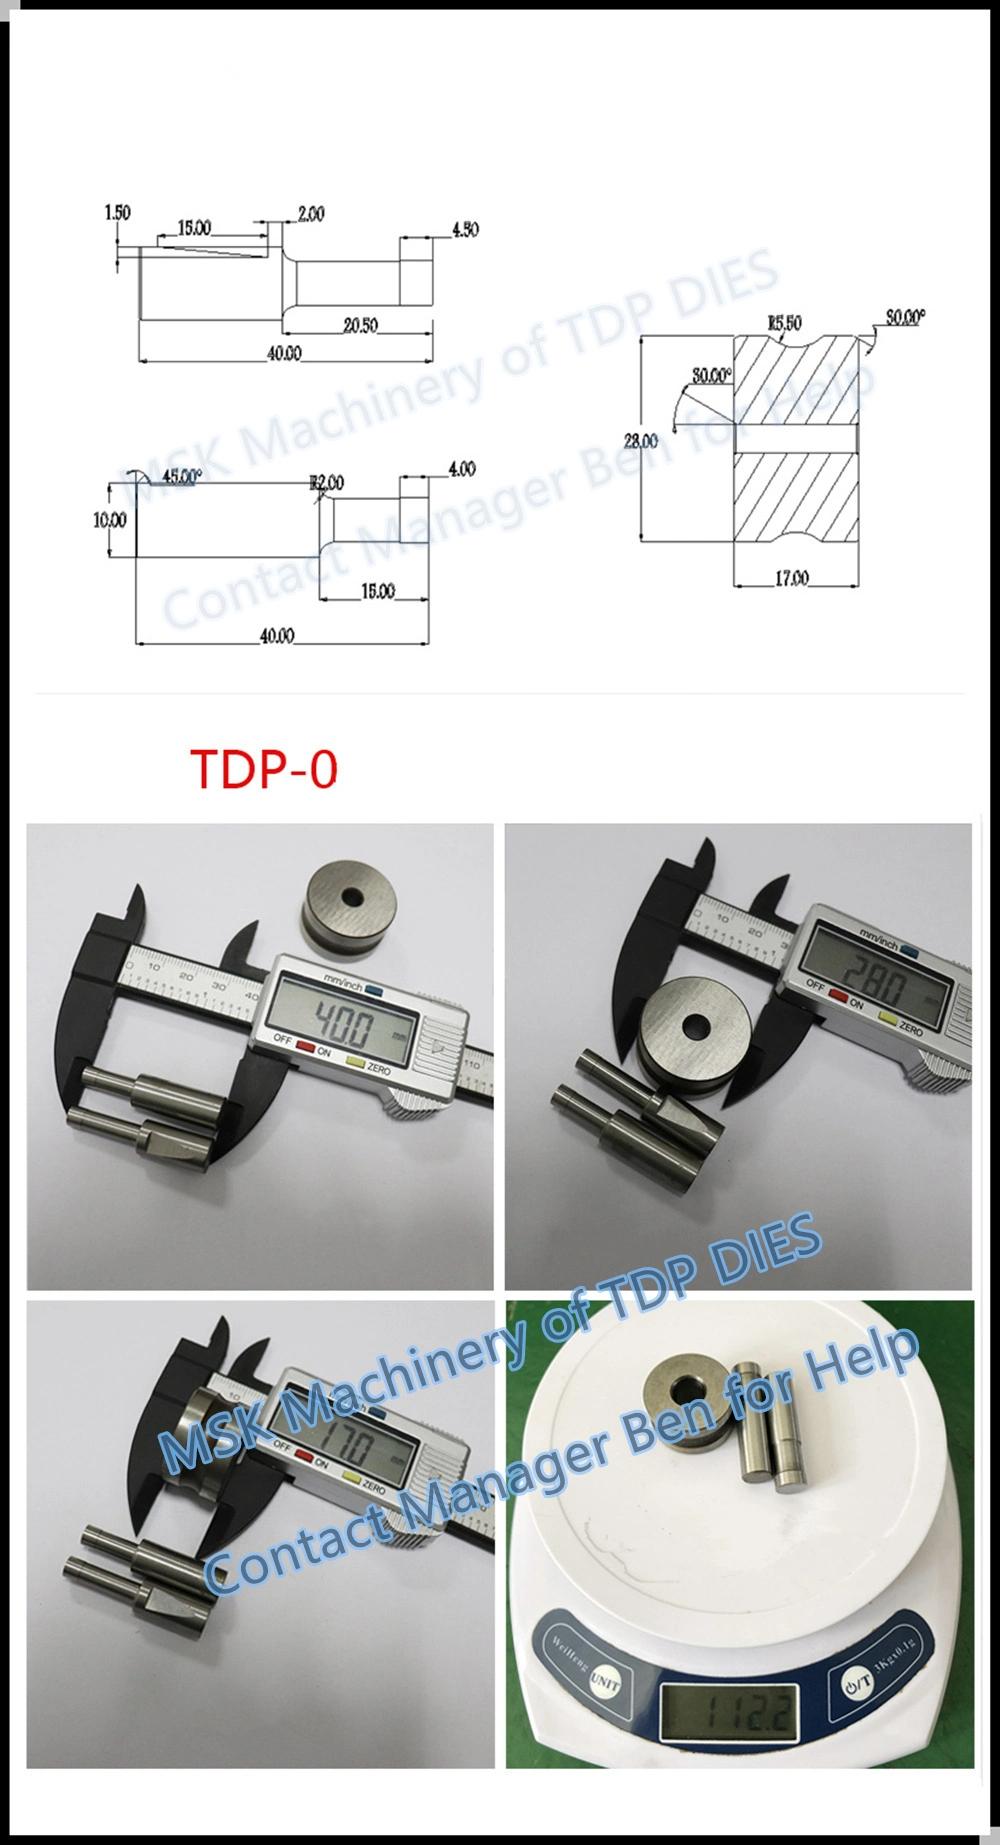 Msk Tablet Press Tooling Tdp6 Tdp5 Tdp1.5 Tdp0 Single Punch Pill Press Machine Tooling